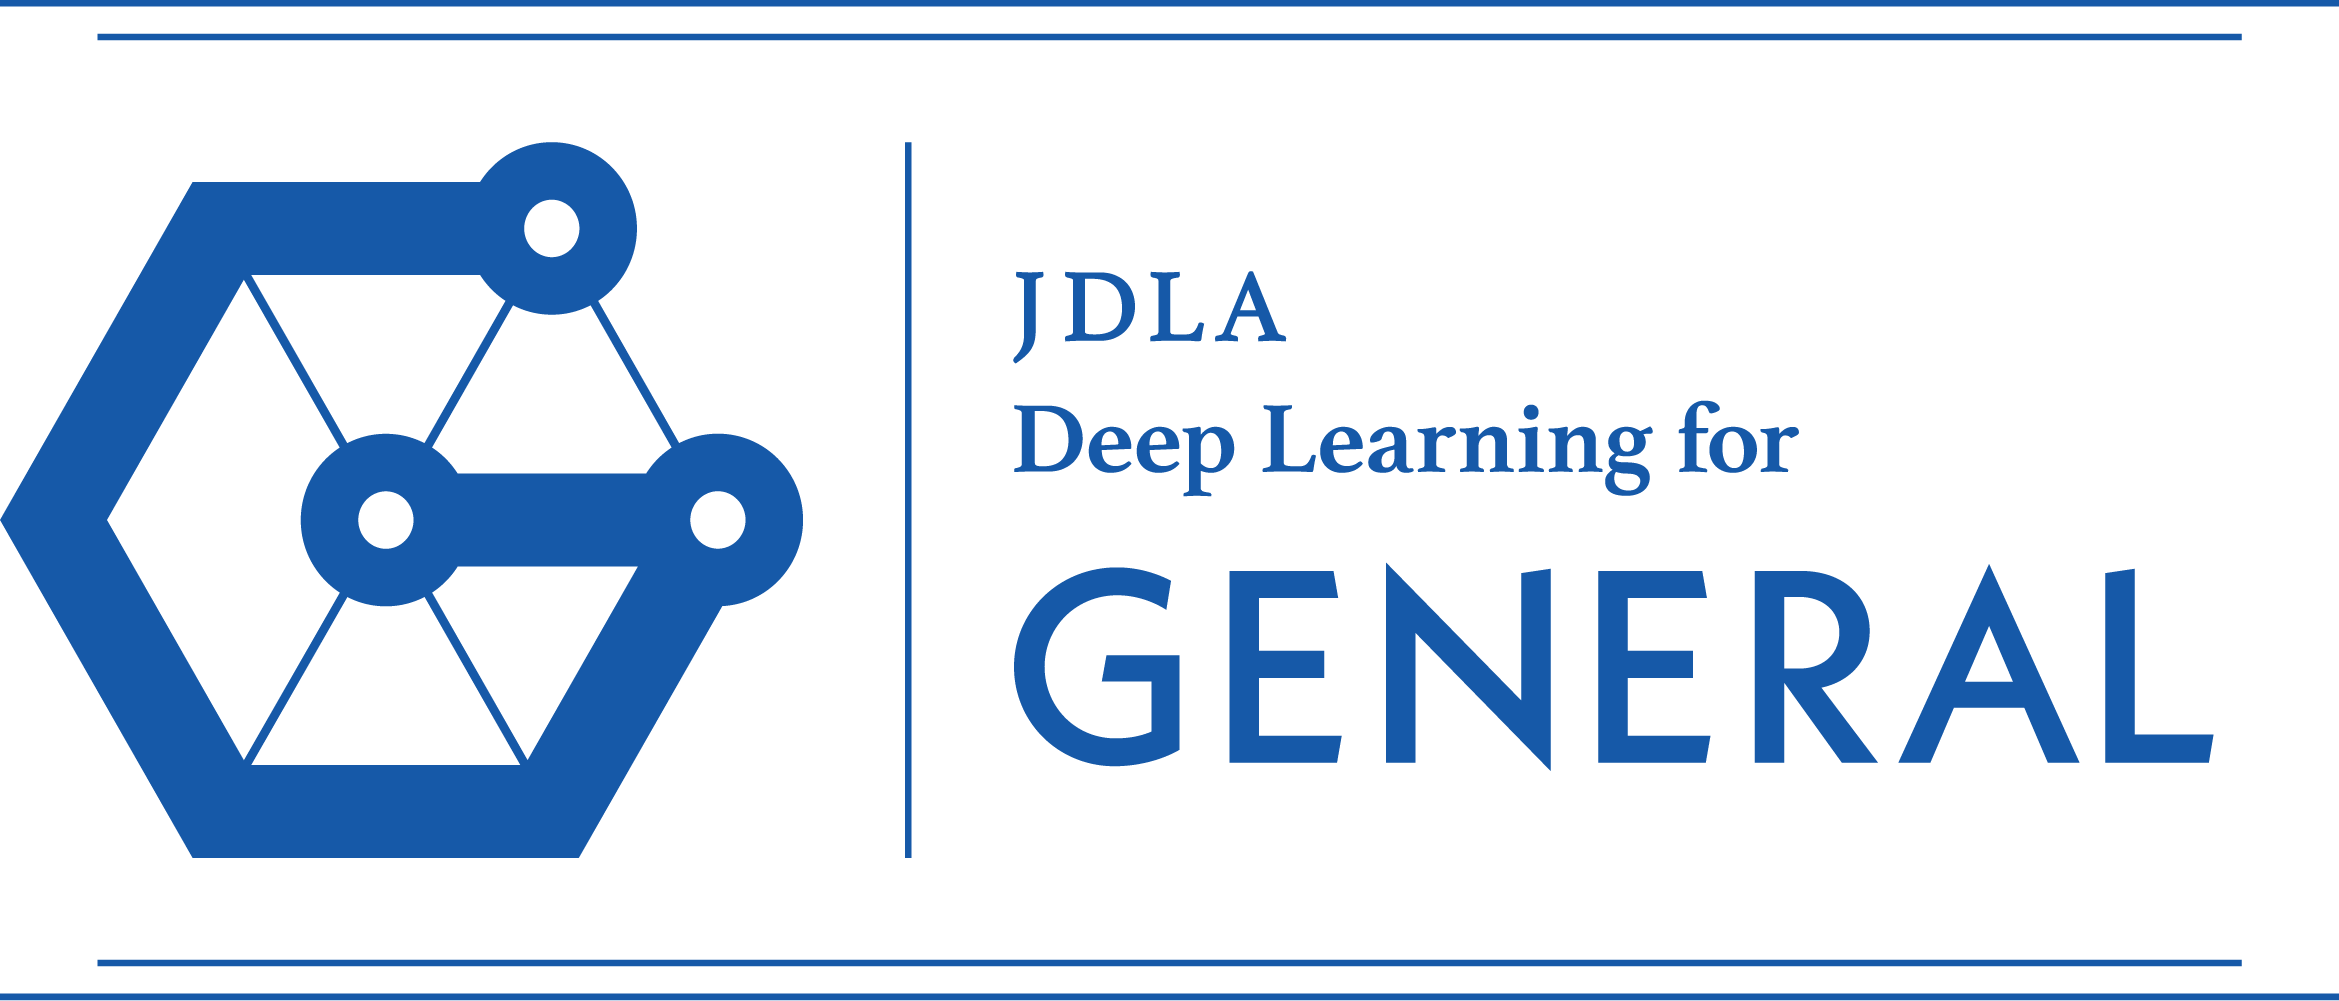 Dx時代 デジタルリテラシーの整備が急務に Jdlaは資格 試験 講座の提供を通じ デジタル人材育成を支援します 日本ディープラーニング協会のプレスリリース